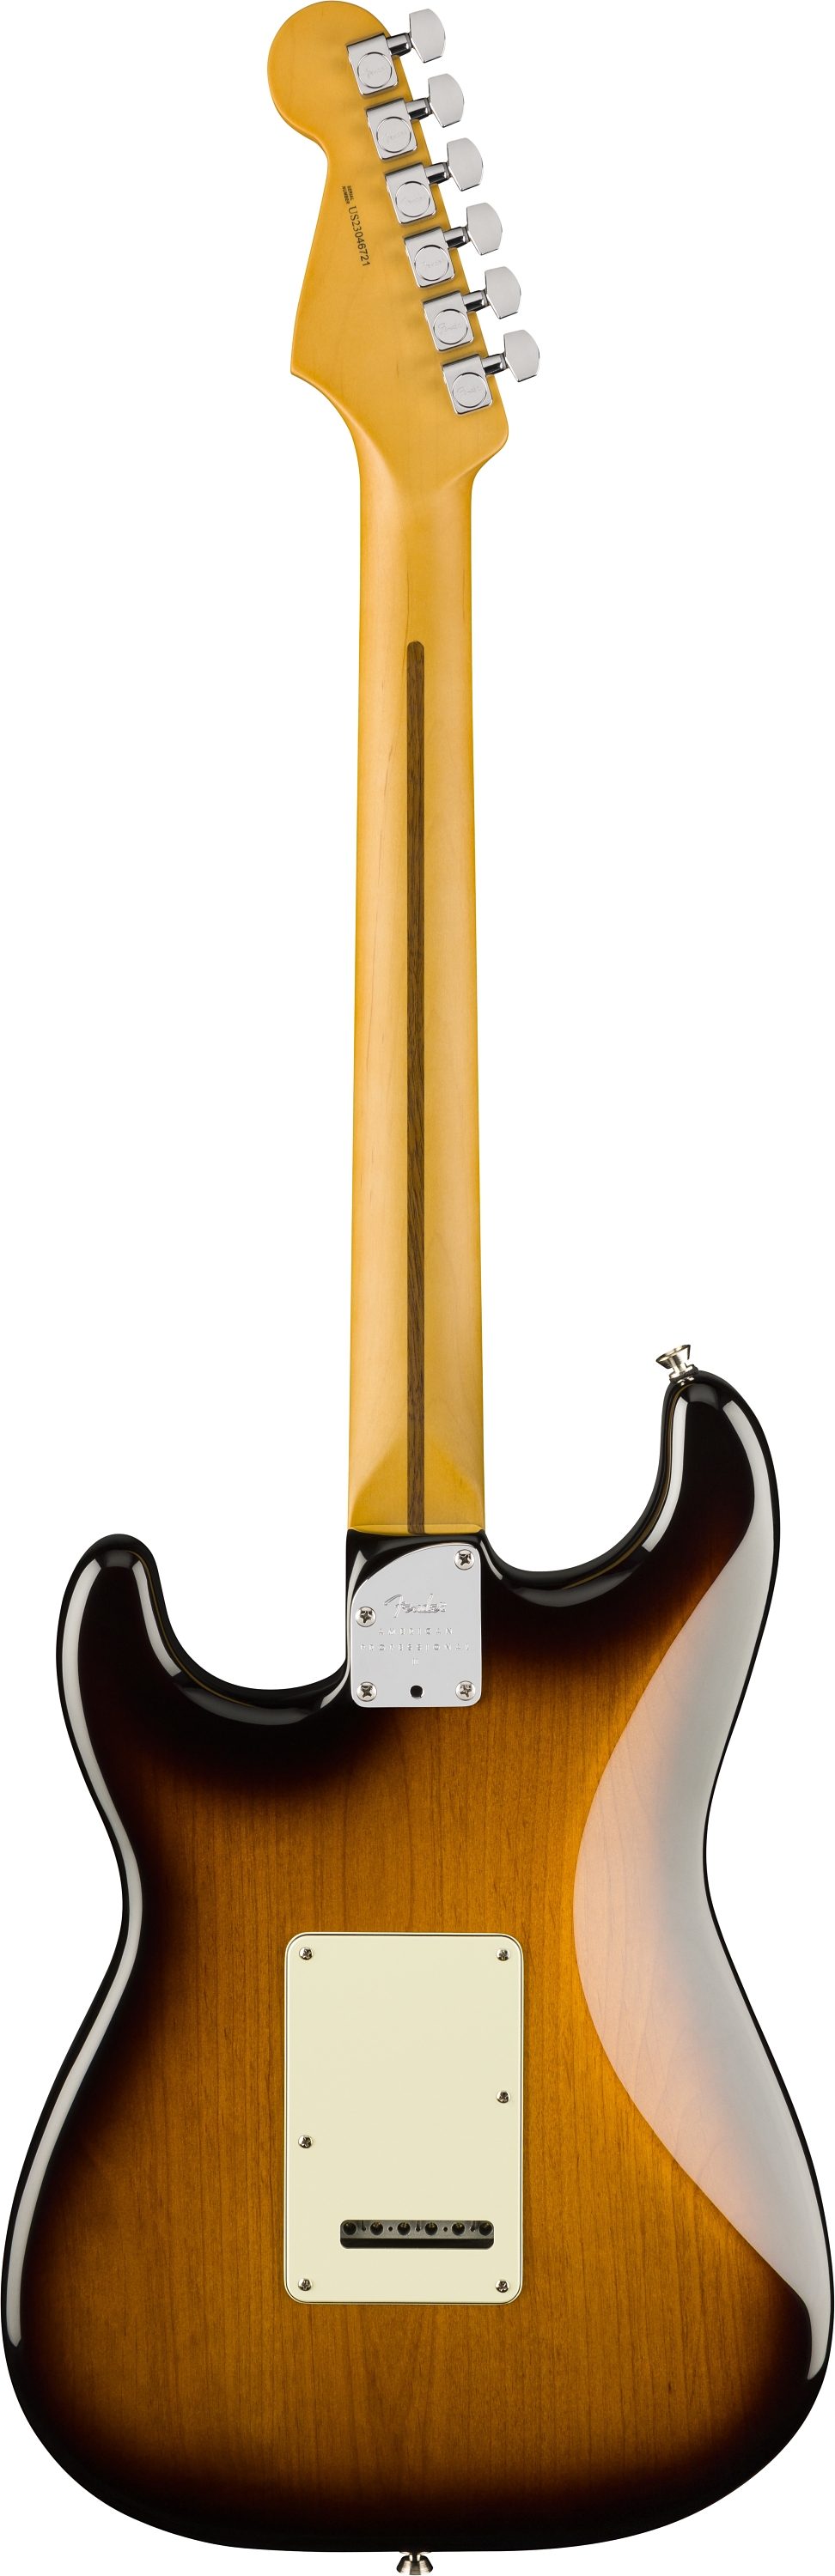 Fender Strat American Professional Ii 70th Anniversary Usa 3s Trem Rw - 2-color Sunburst - Str shape electric guitar - Variation 2